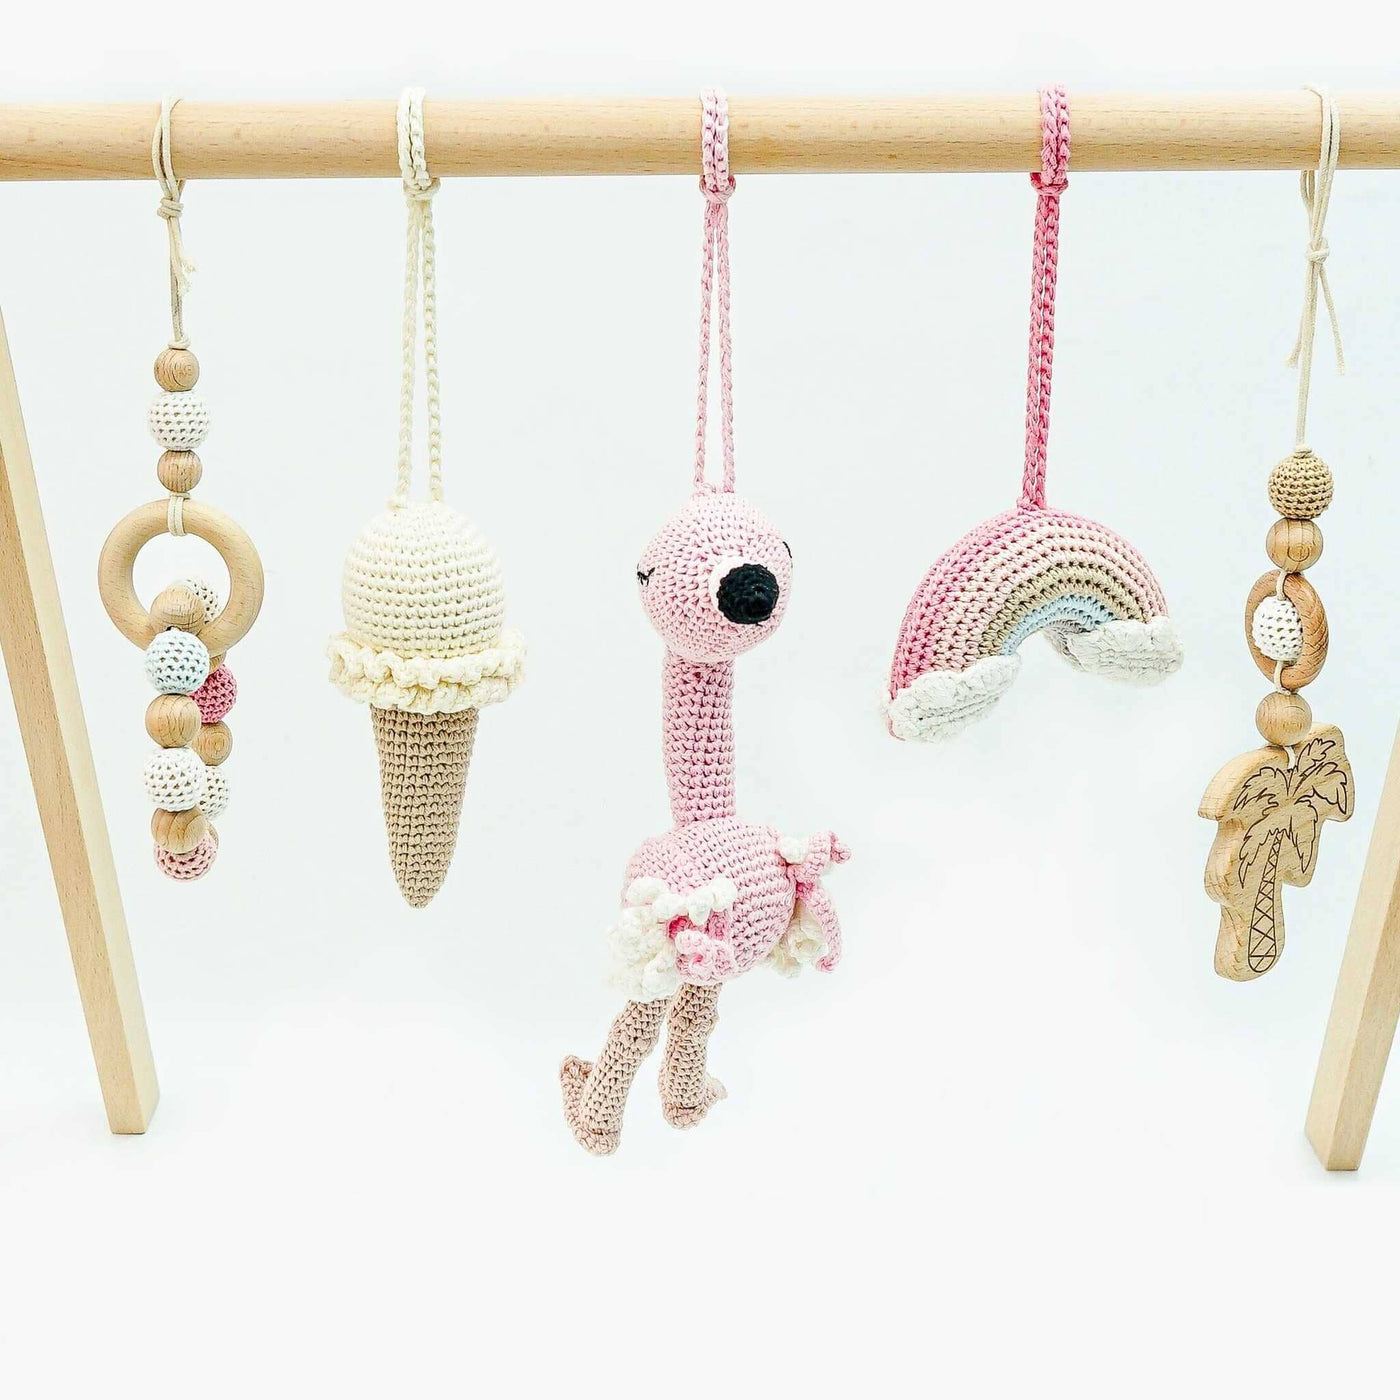 Handmade Crochet Toys for Baby Gym | Flamingo Dreams toys Jabaloo 